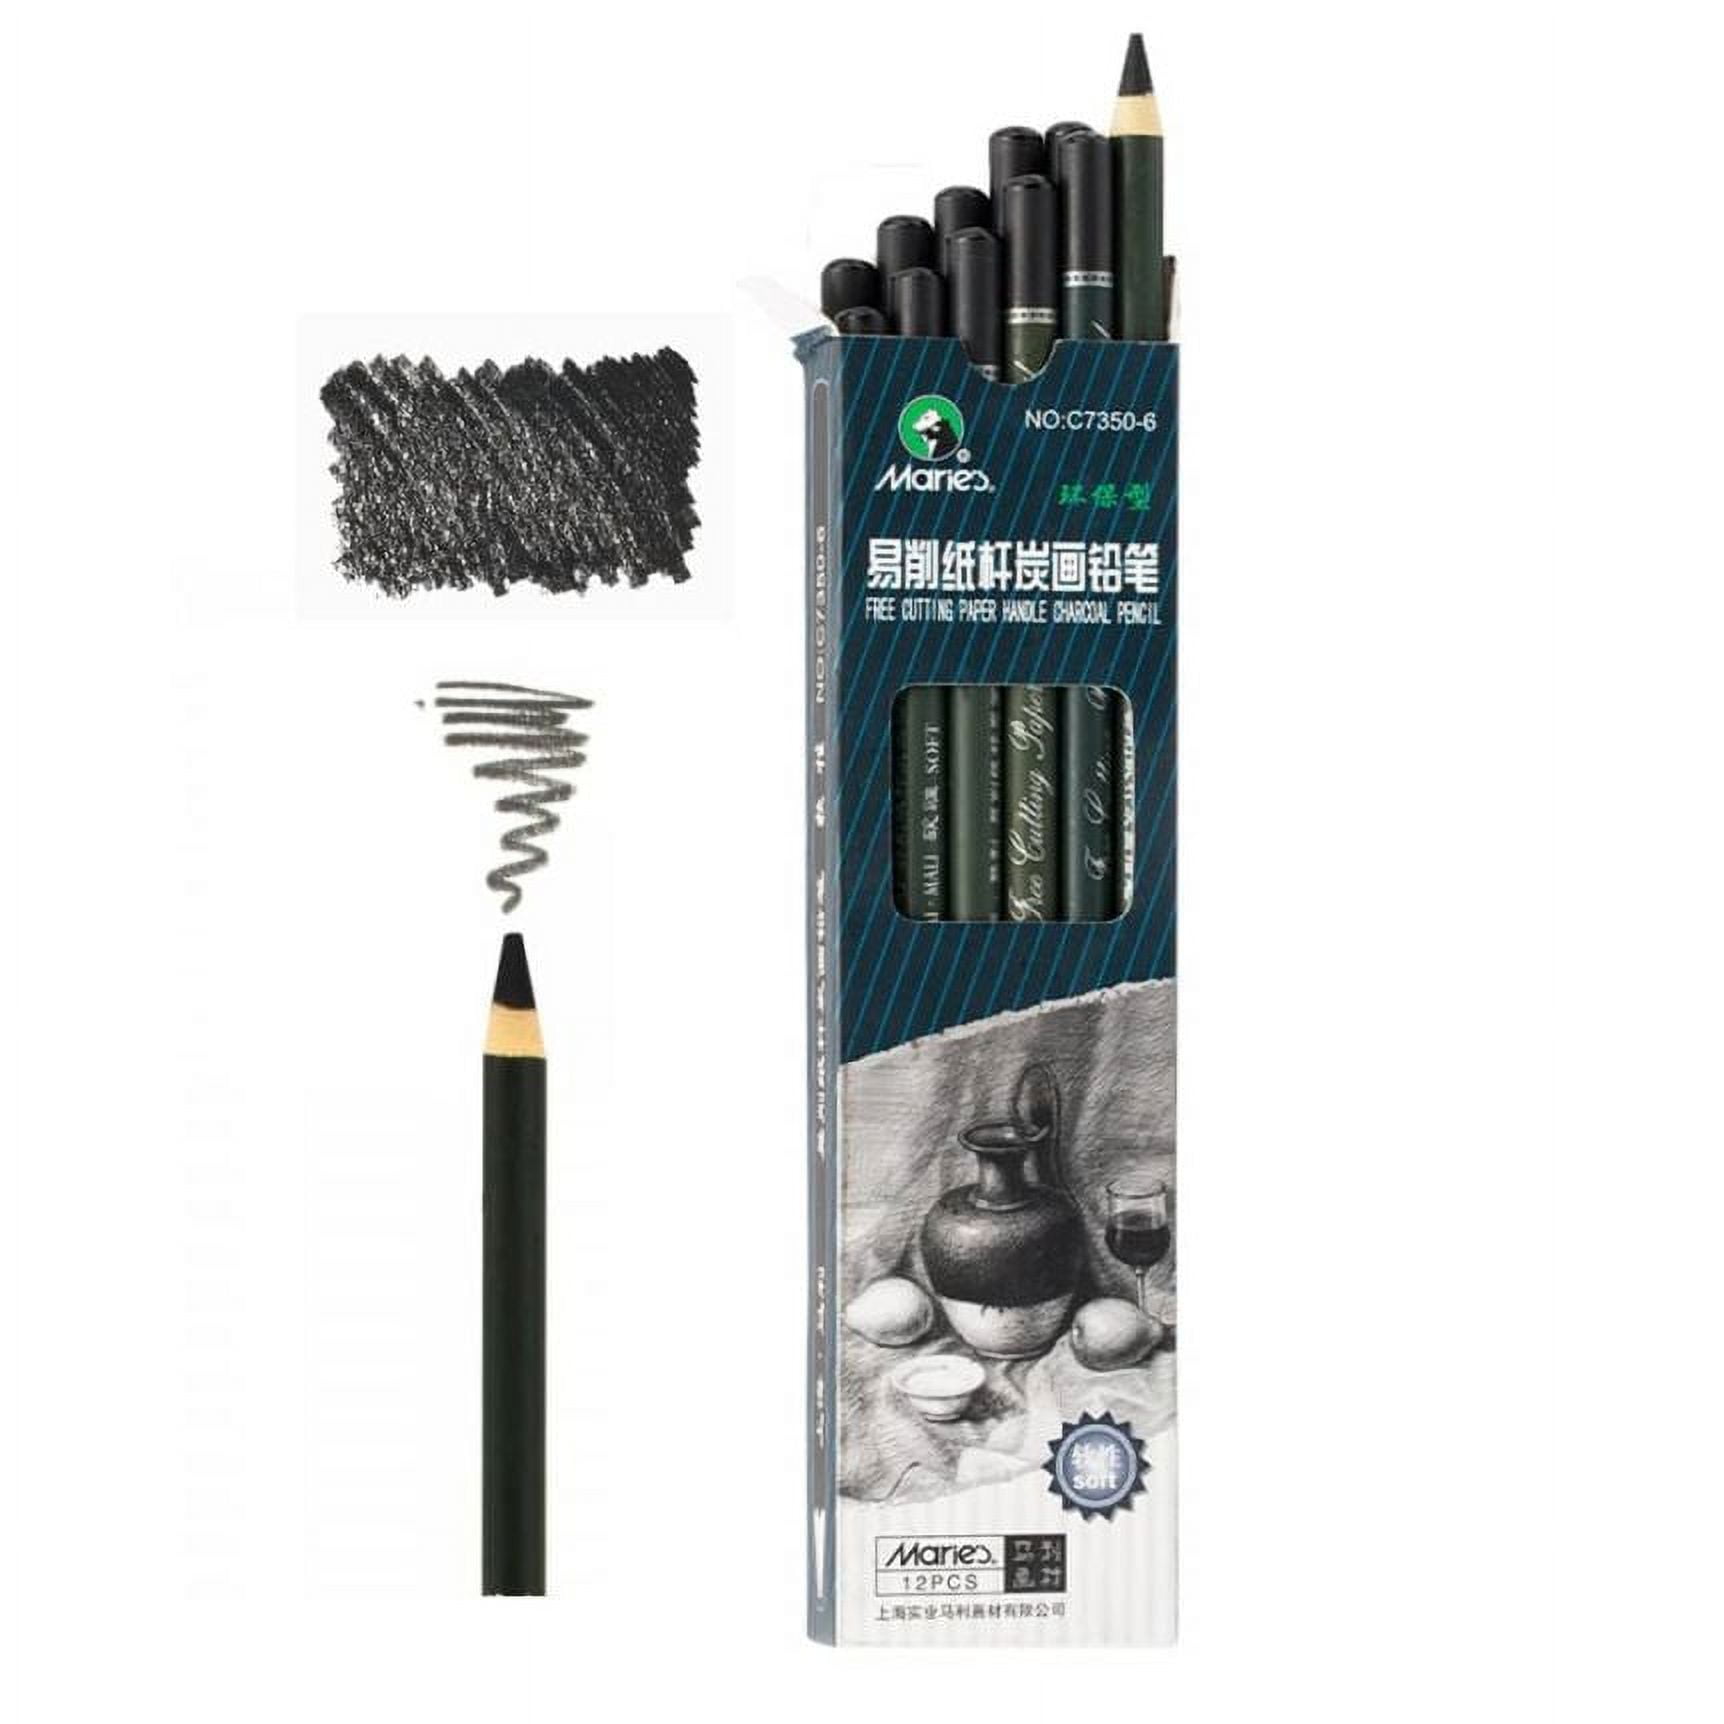 Corslet 47 Pieces Pencil Kit Professional Graphite Charcoal Sketch Pencil  Set - Price History